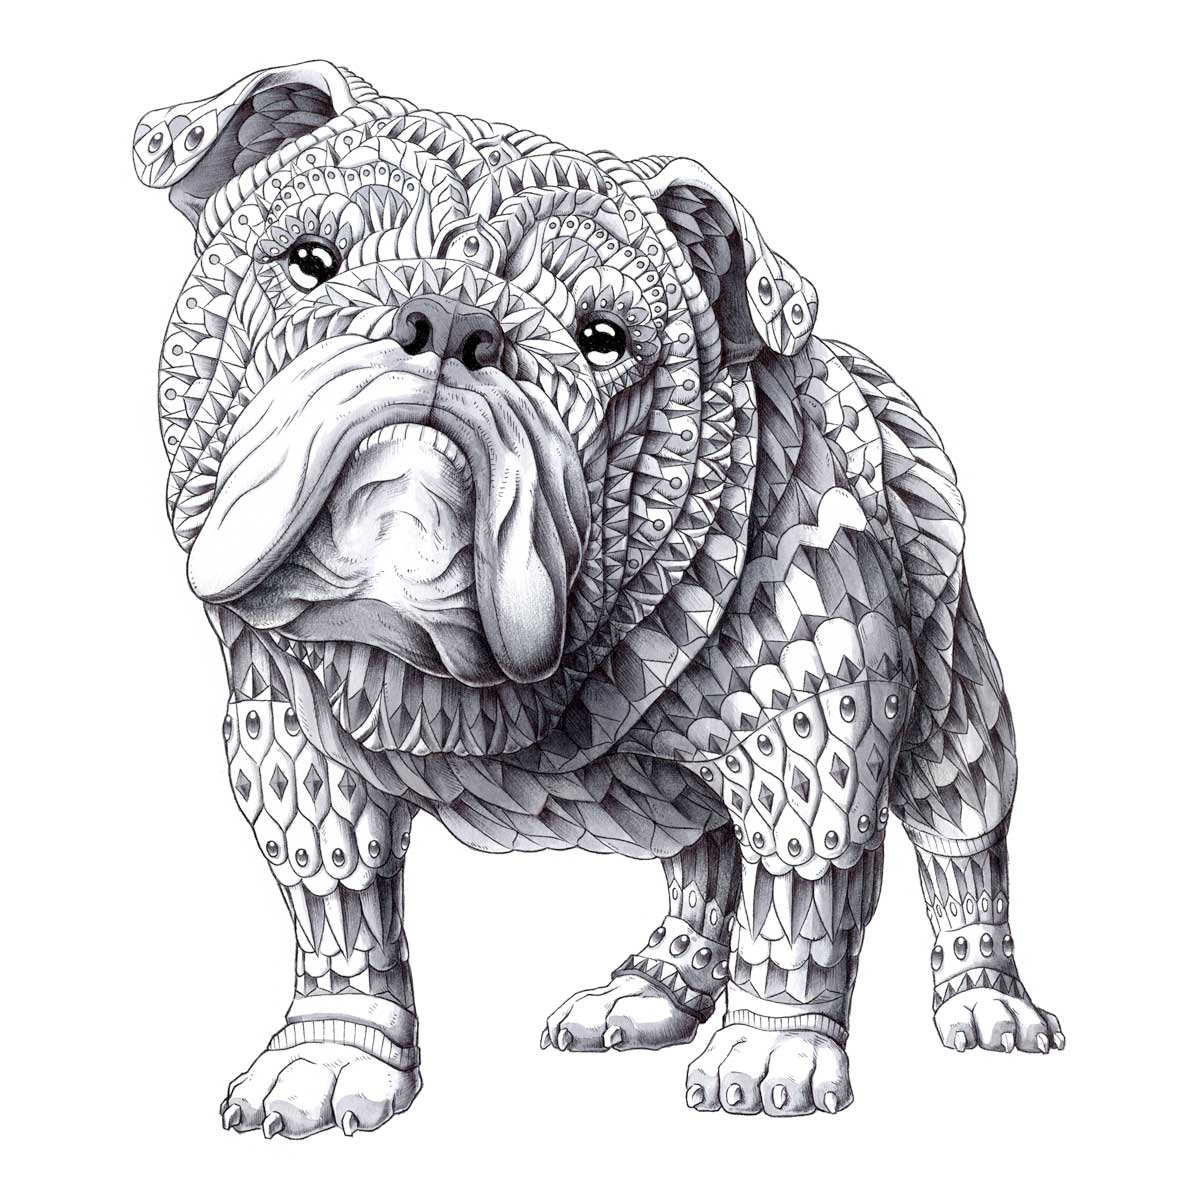 English Bulldog (Original Artwork)